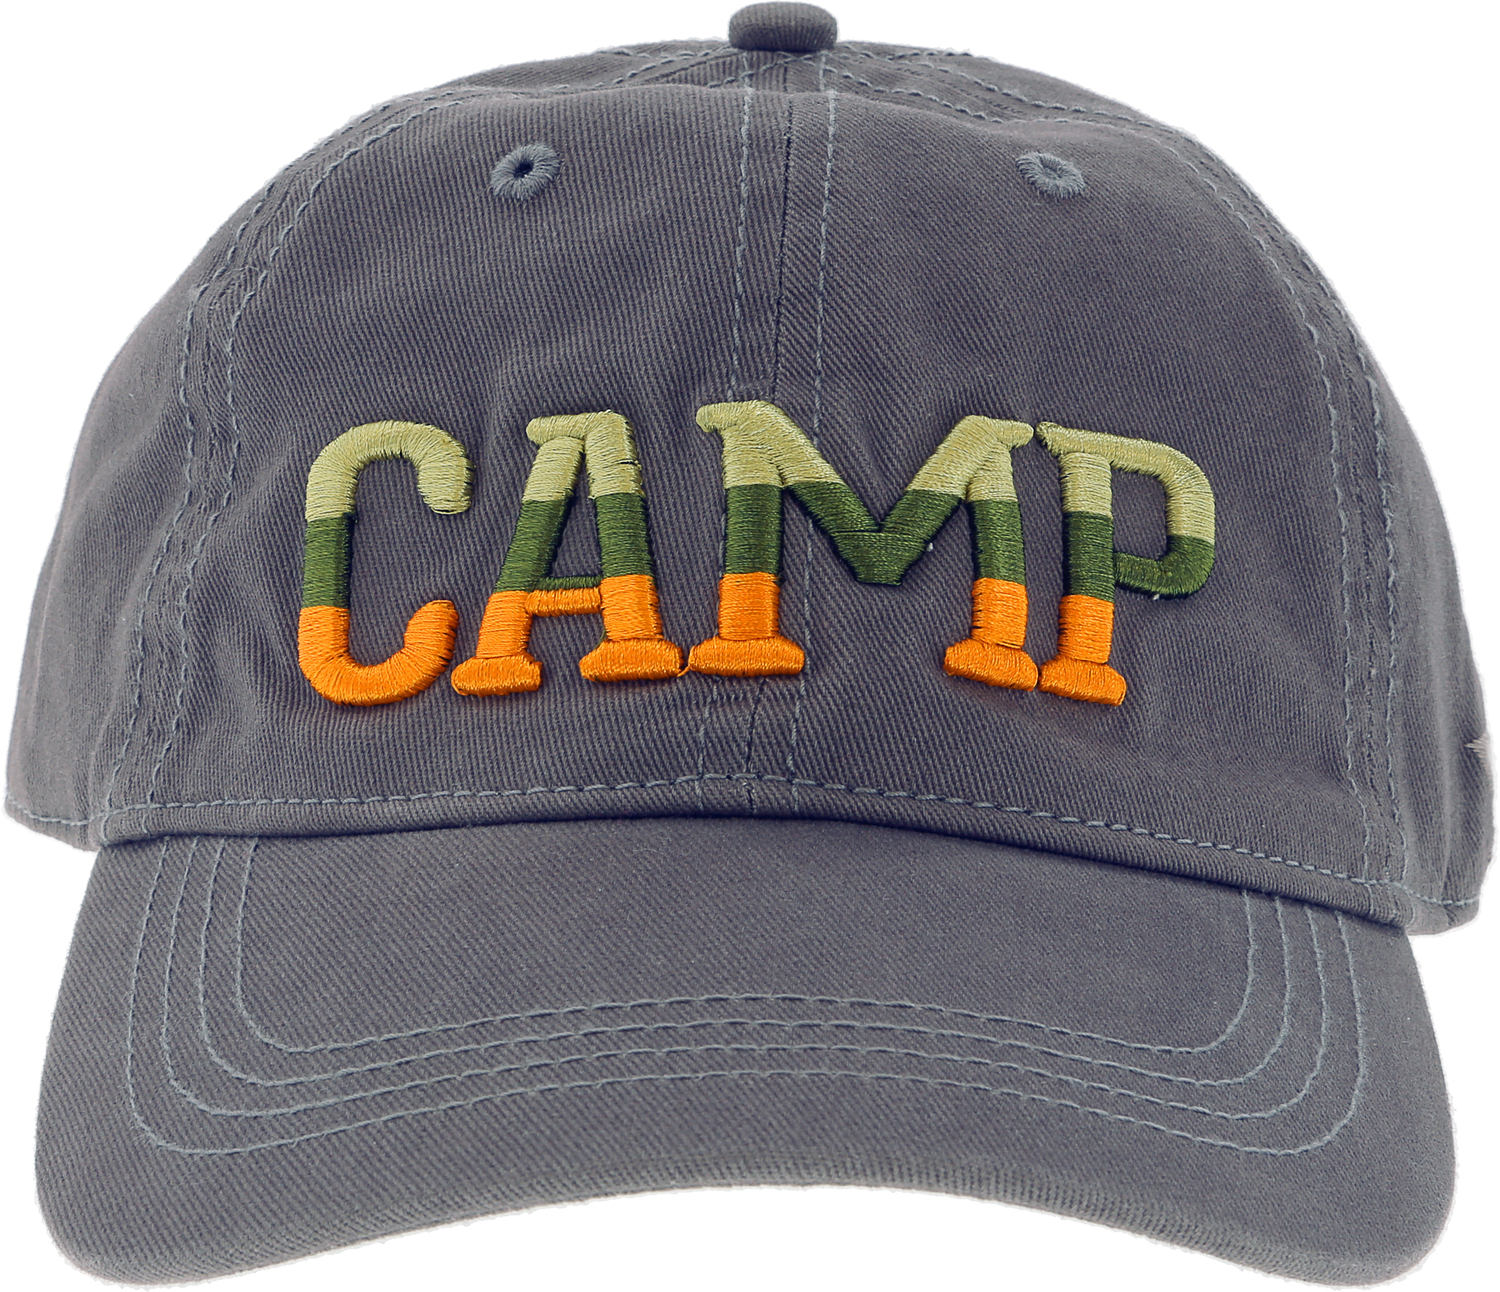 Camp by We People - Camp - Dark Gray Adjustable Hat